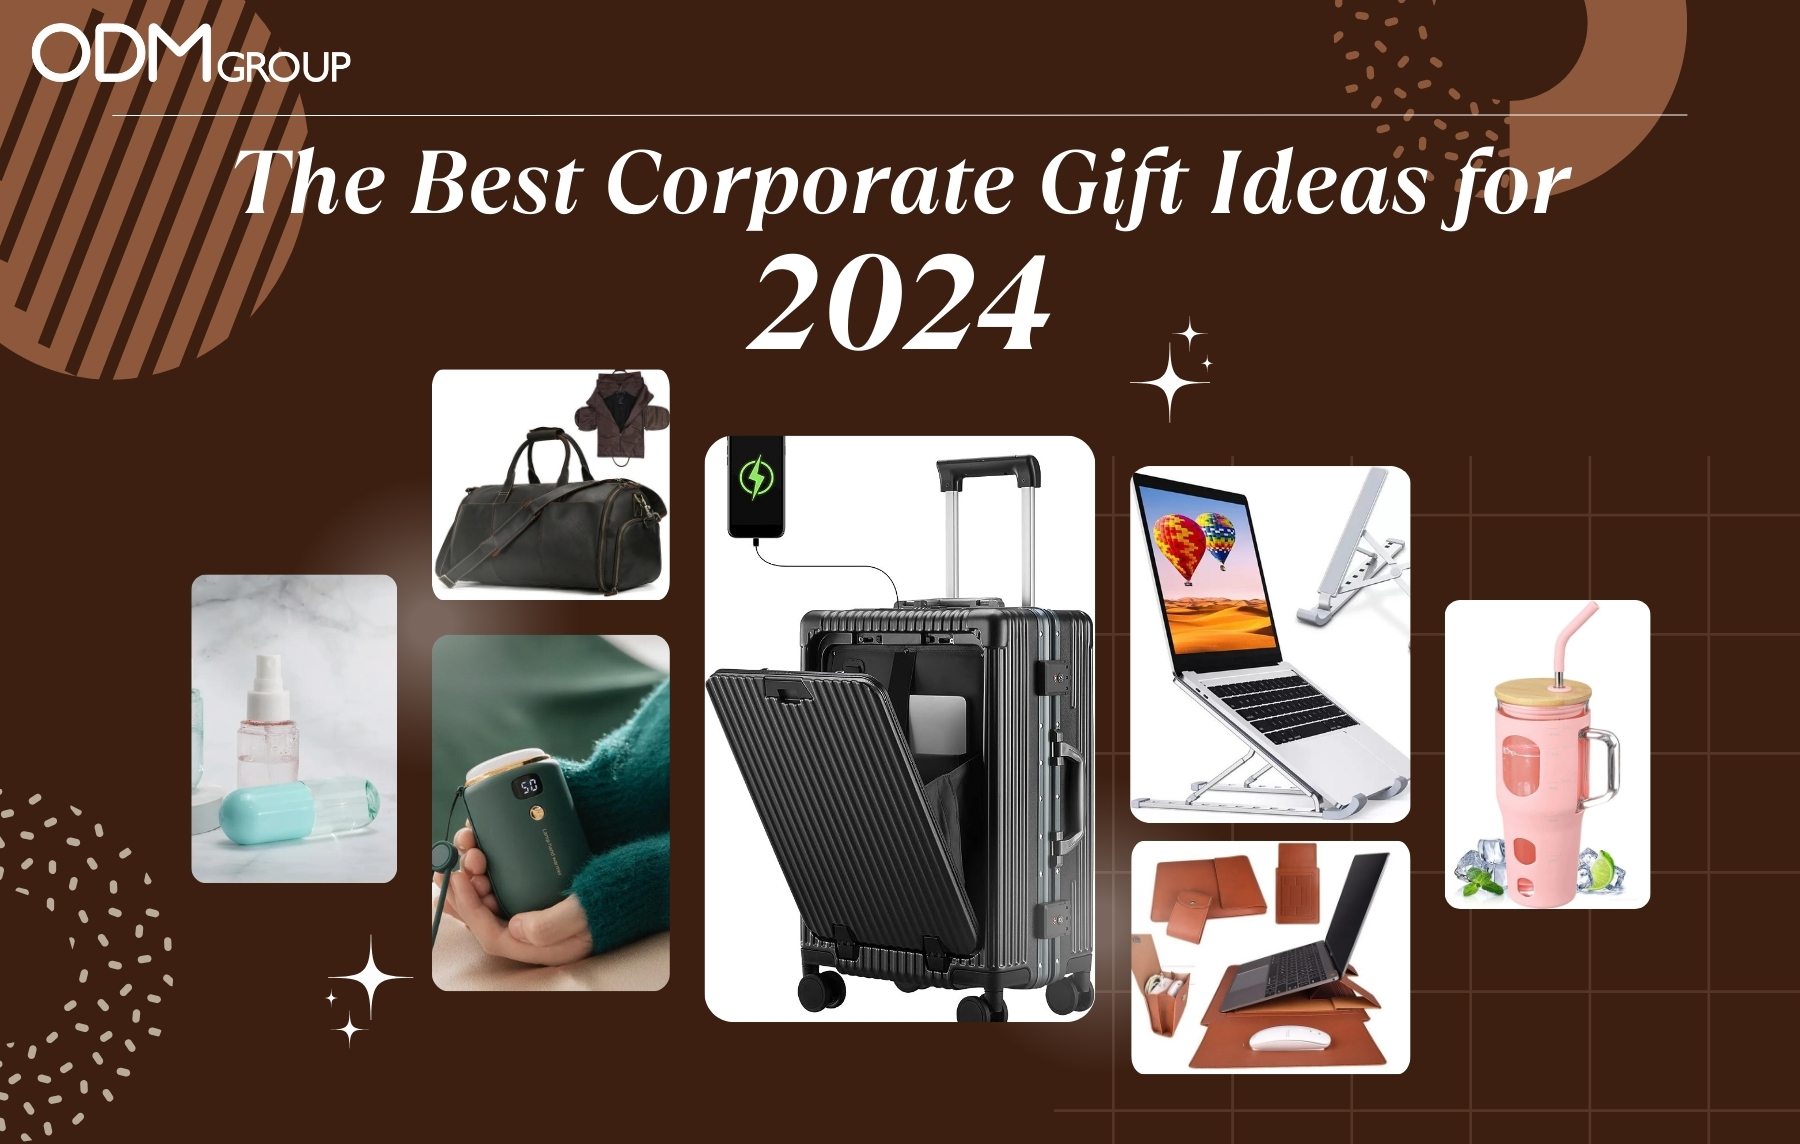 7 Trendy 2021 Corporate Gift Ideas